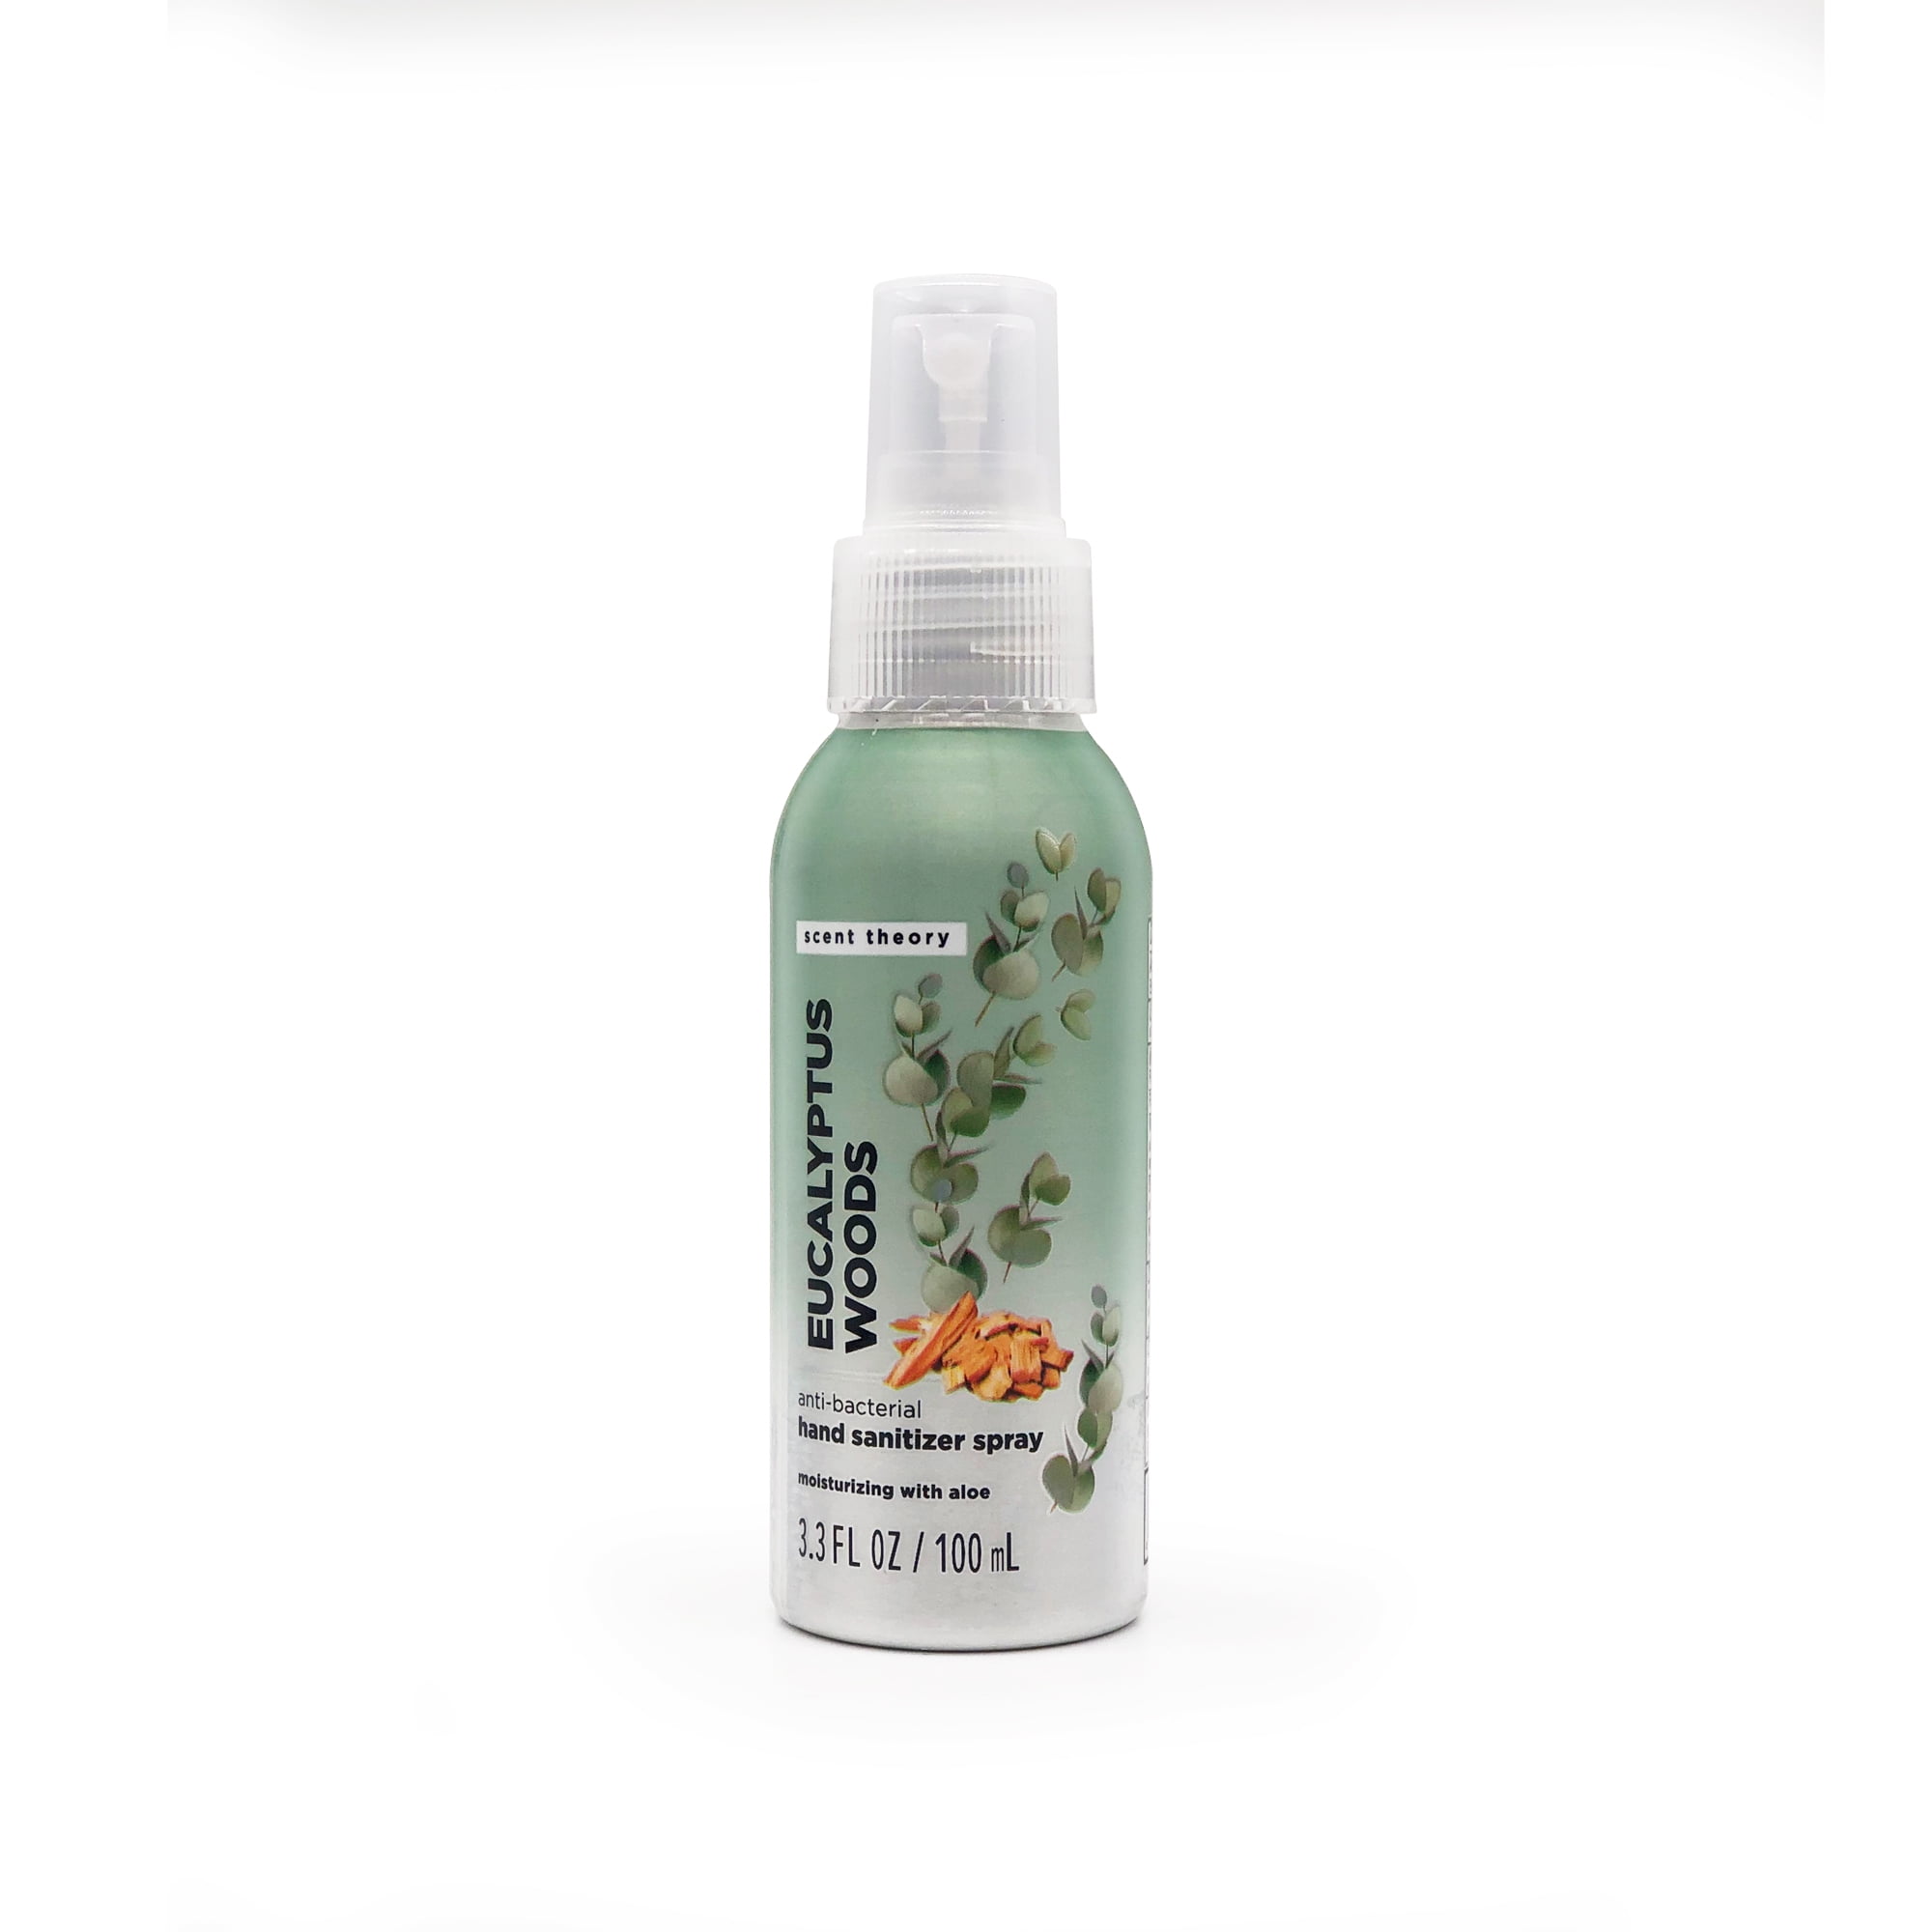 Scent Theory Hand Sanitizer Mist, Eucalyptus Woods Antibacterial Spray, 3.3 fl oz